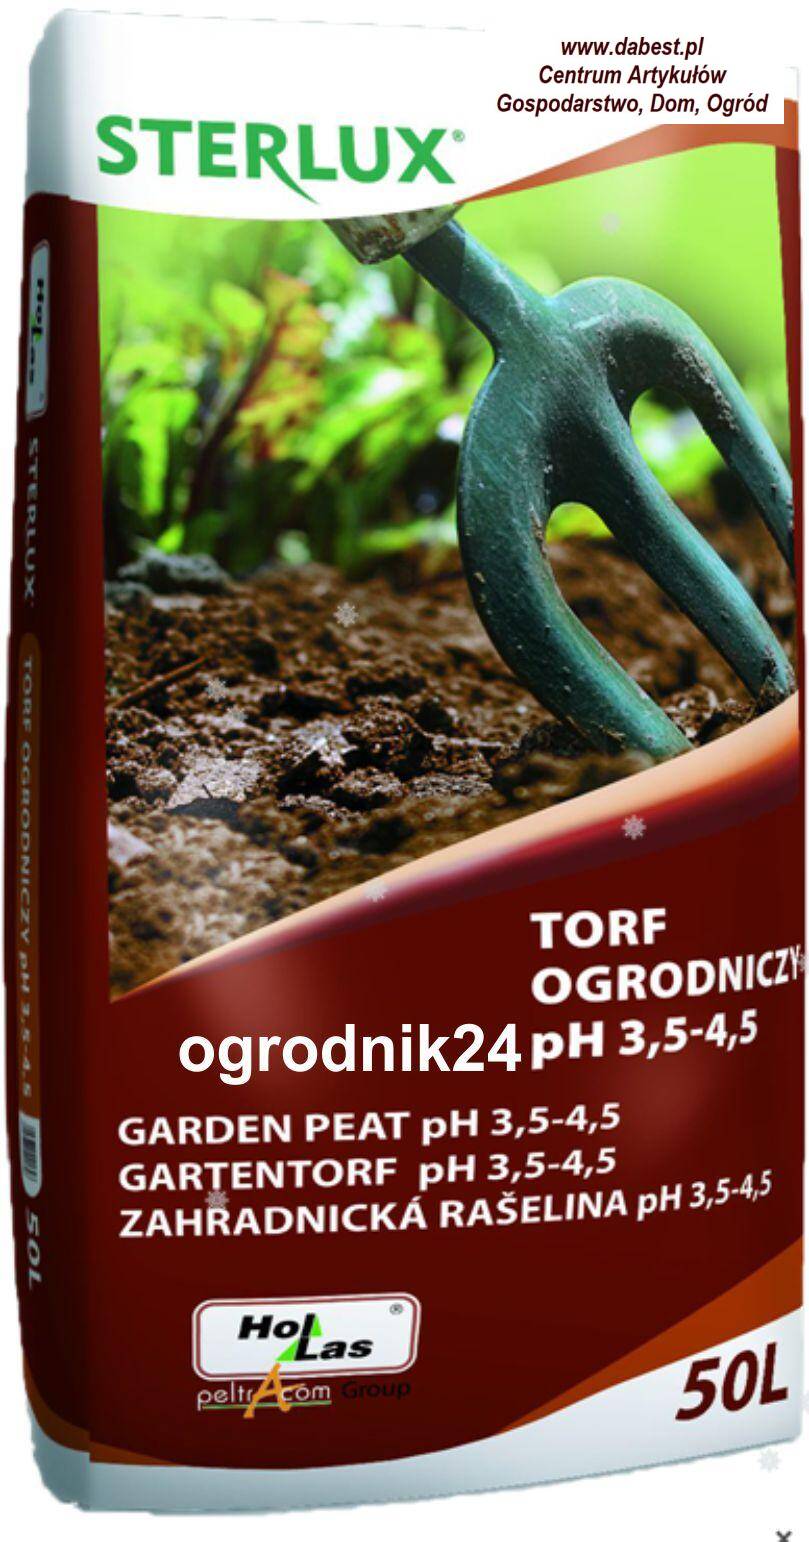 HOLLAS Torf ogrodniczy ph 3,5-4,5 - 50L